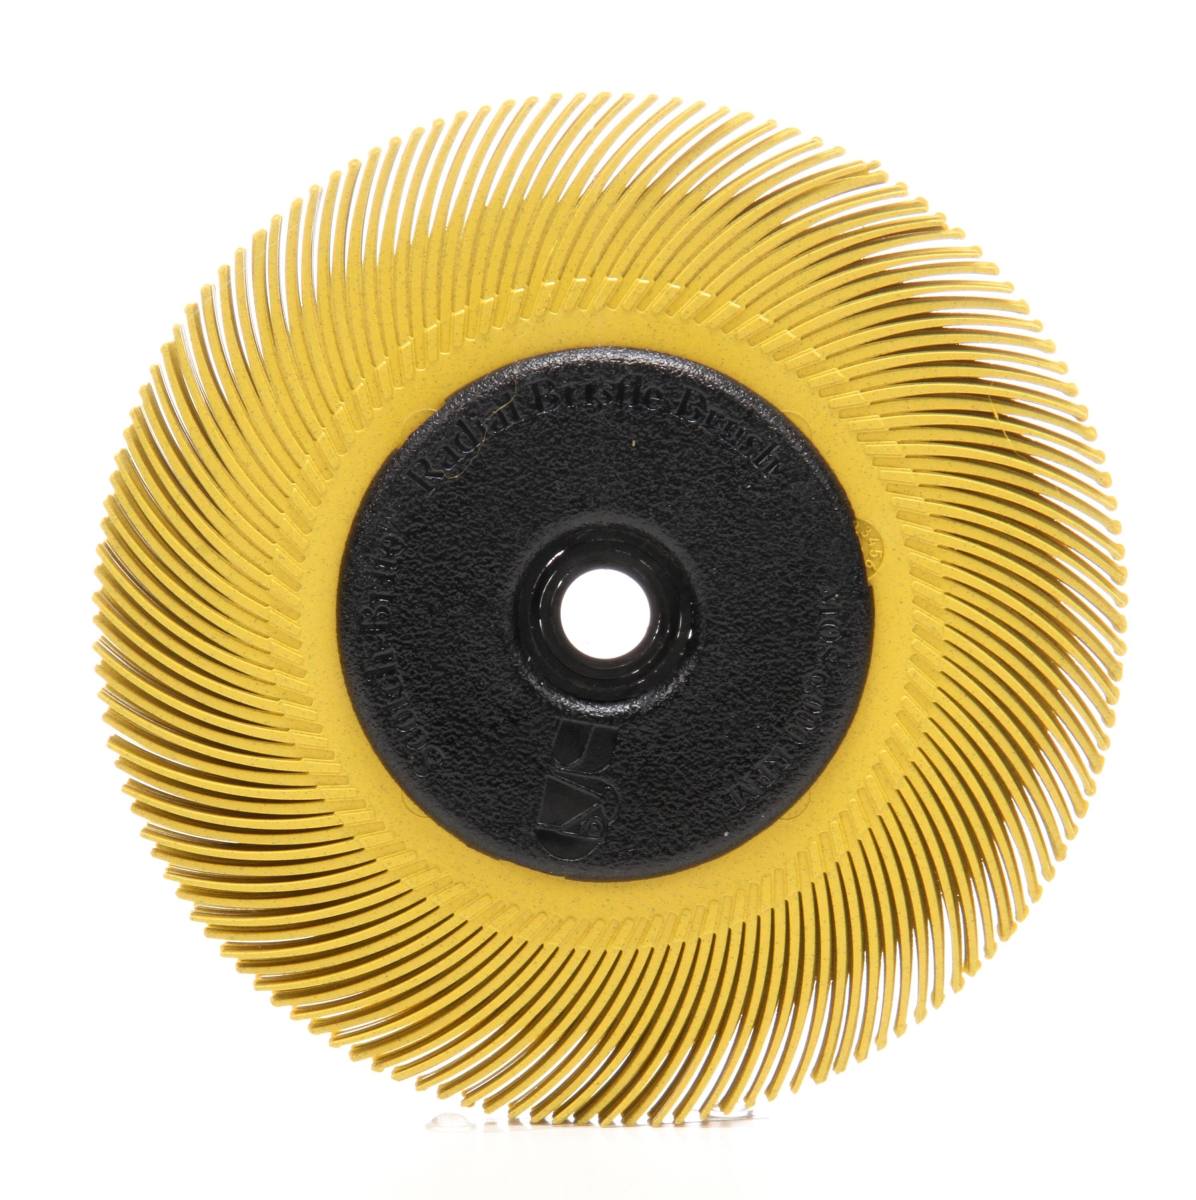 3M Scotch-Brite Radial Bristle Disc BB-ZB with flange, yellow, 152.4 mm, P80, type C #33215